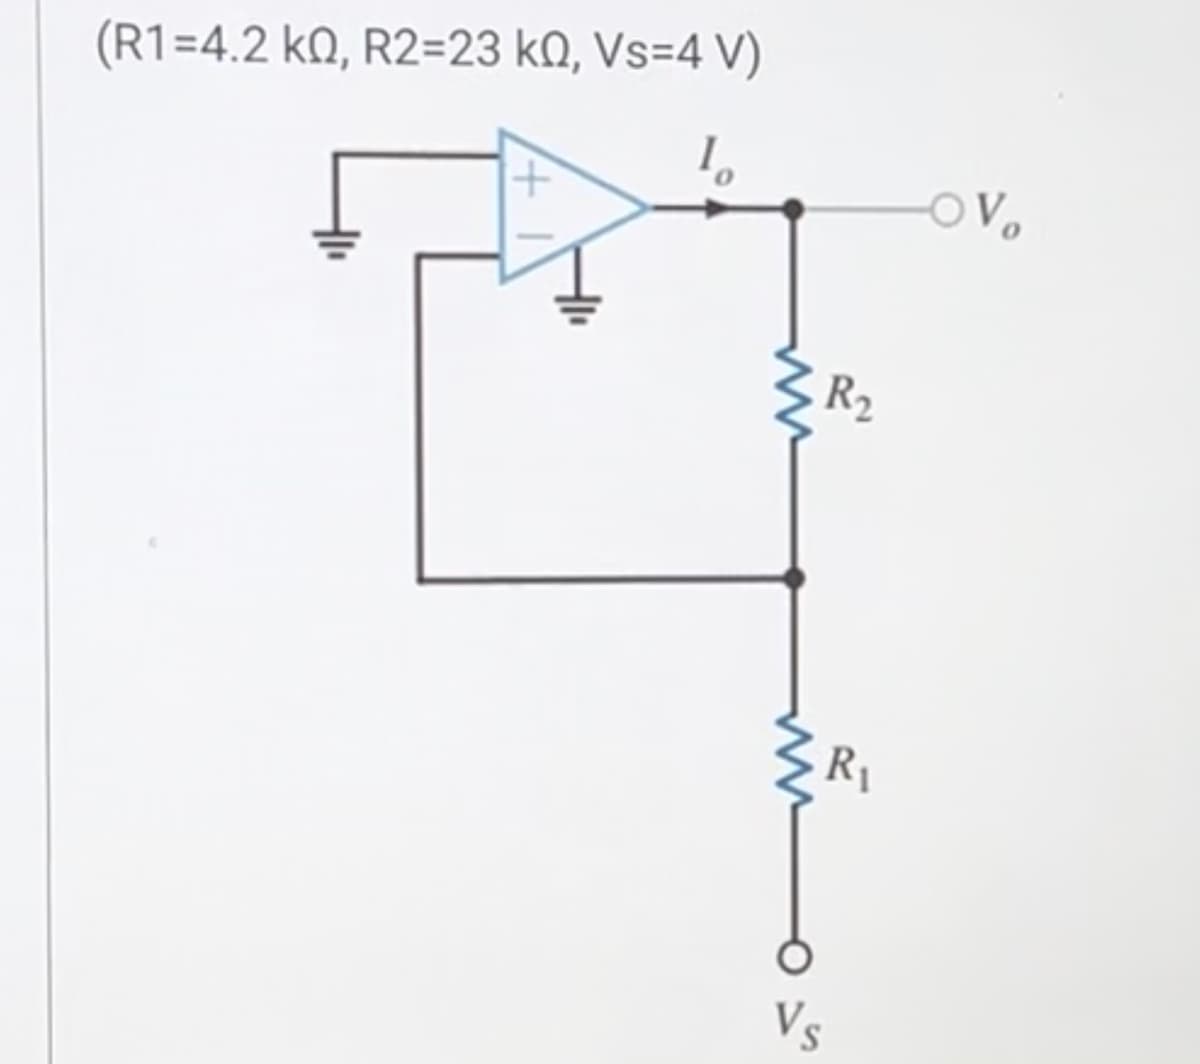 (R1=4.2 k0, R2=23 k0, Vs=4 V)
R₂
R₁
-OV